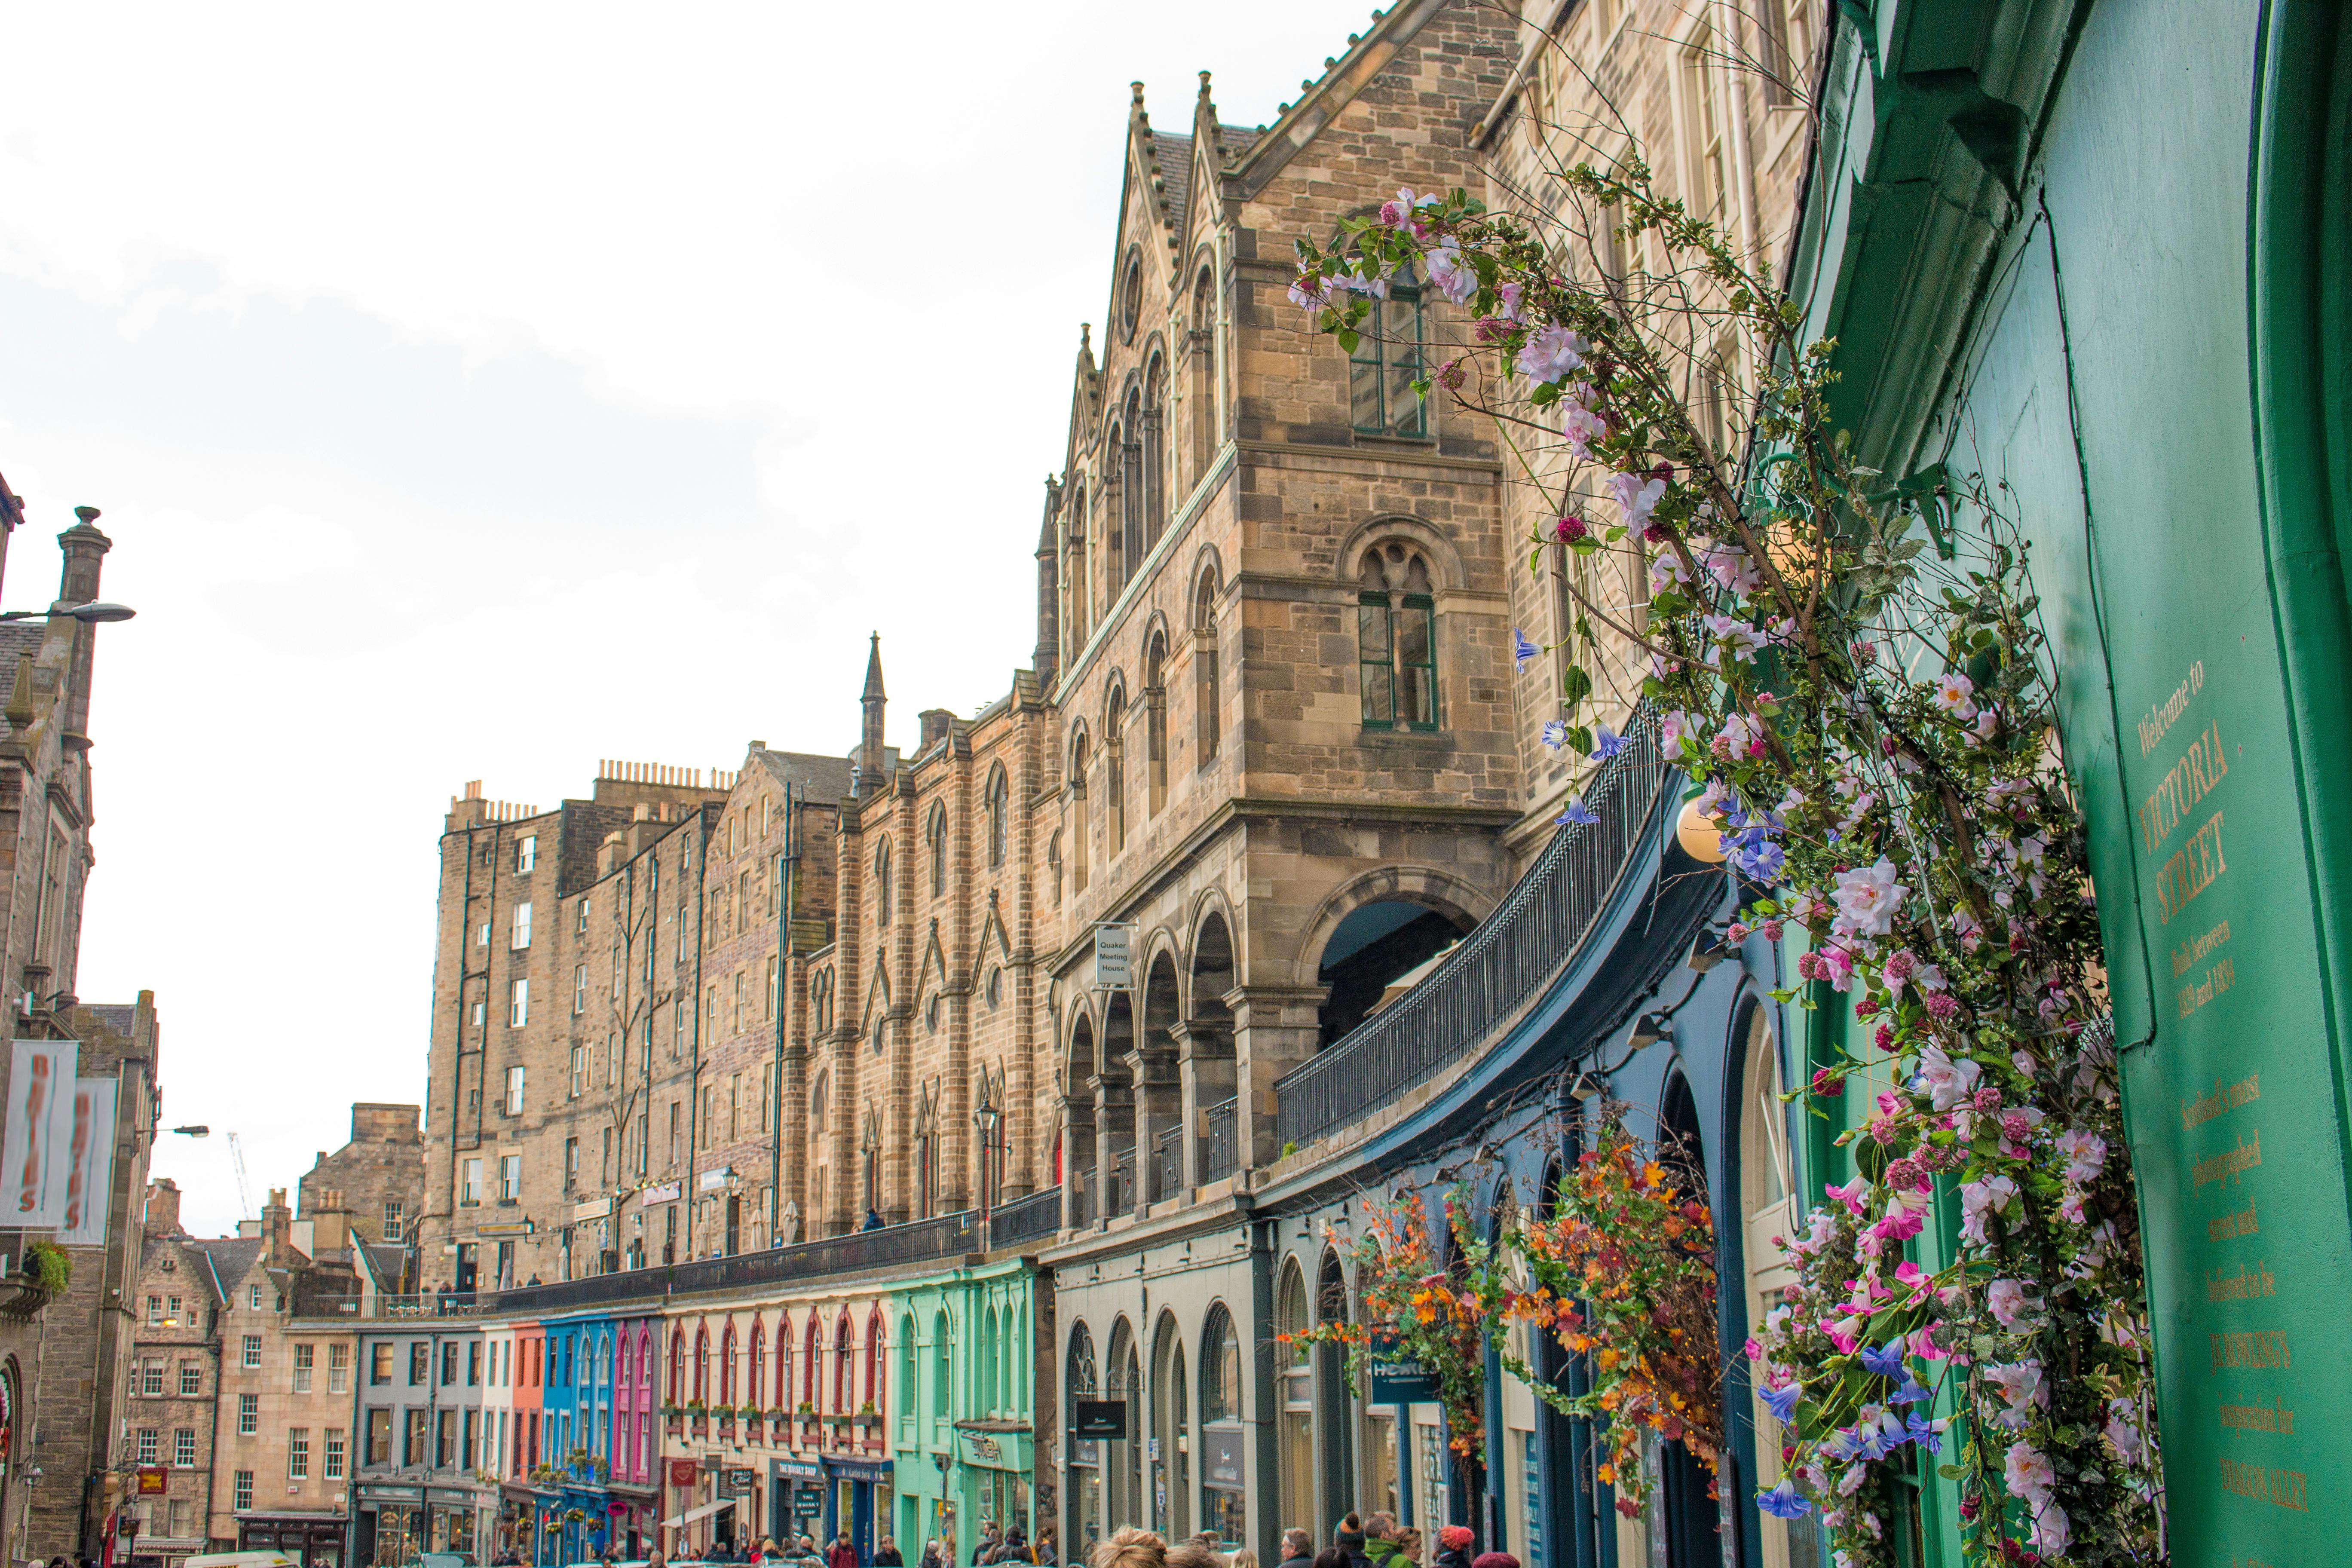 Explore Harry Potter’s Edinburgh on a self-guided audio tour